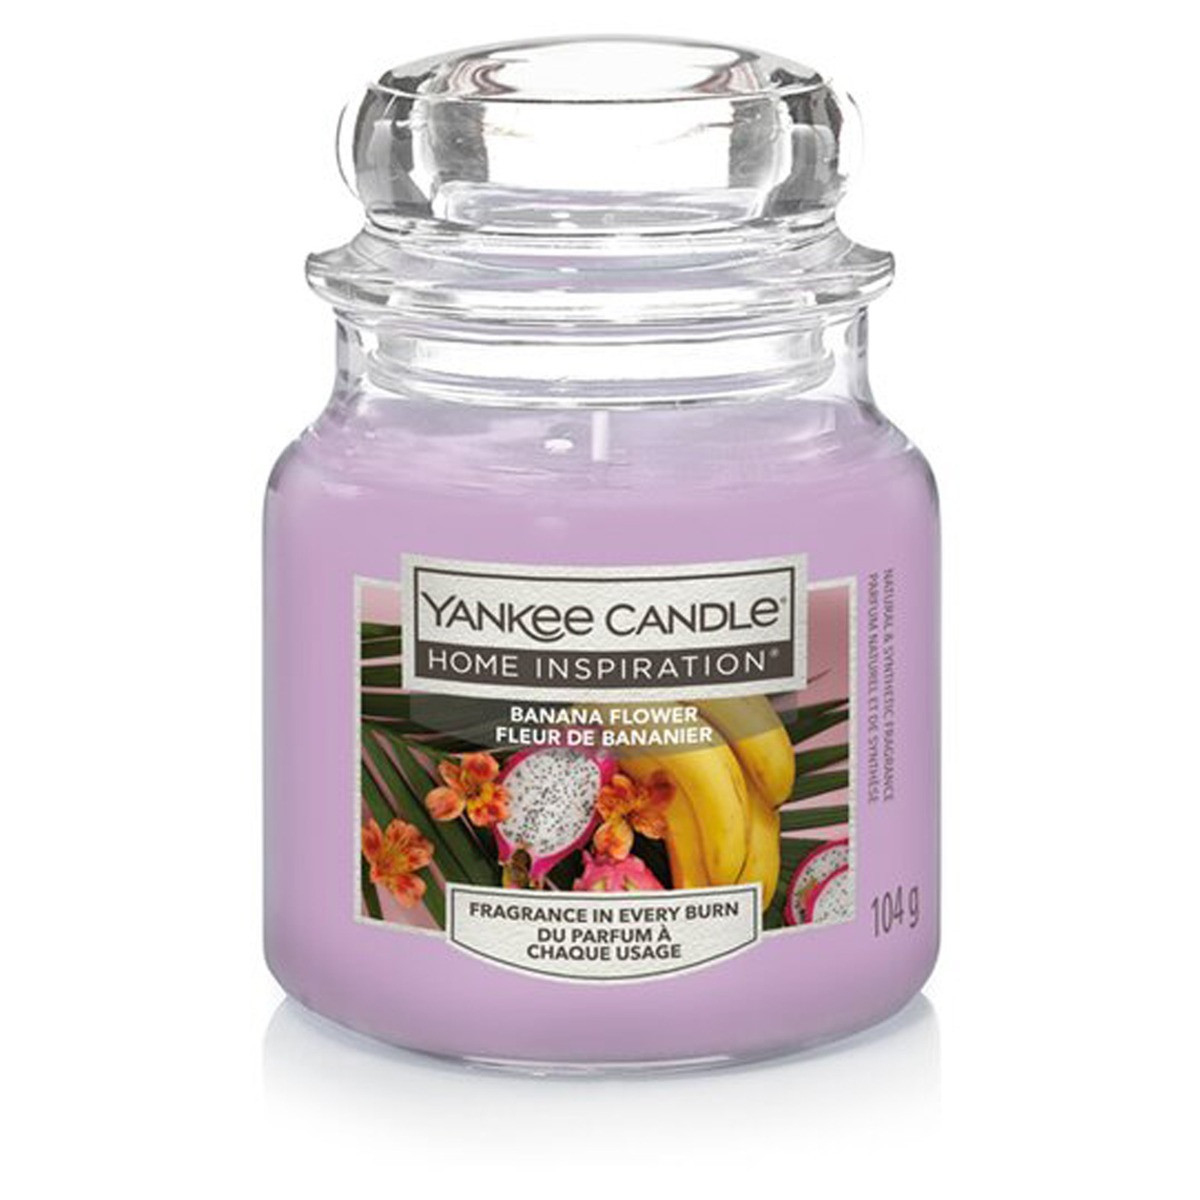 Yankee Candle Home Inspiration Small Jar - Banana Flower>